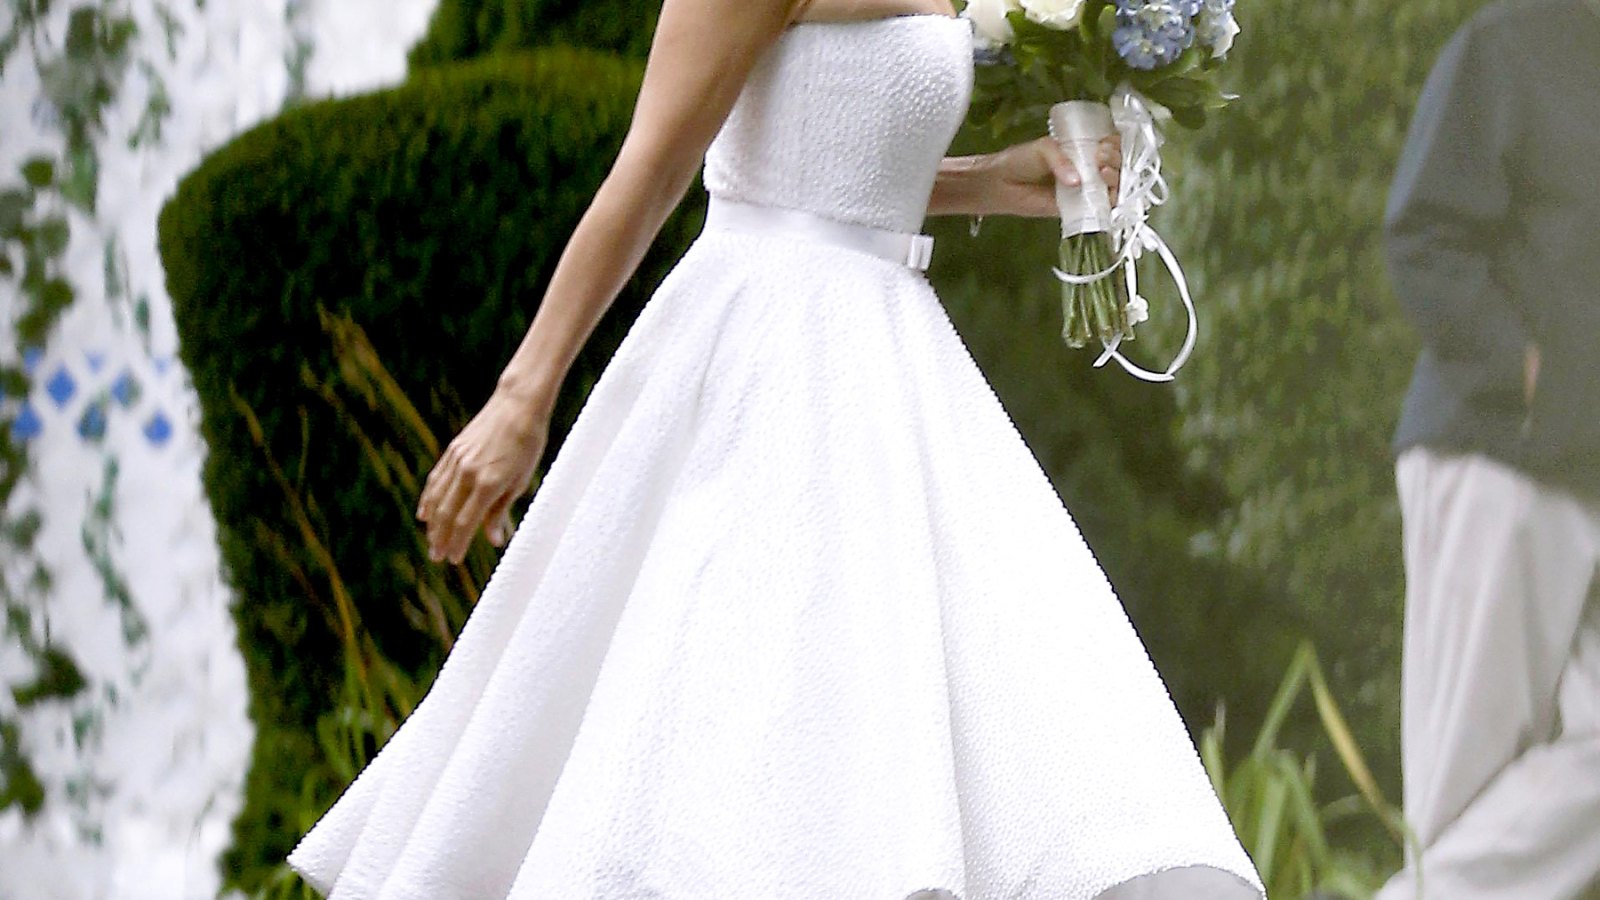 Cheryl Hines in her wedding dress in Hyannis Porton August 2, 2014